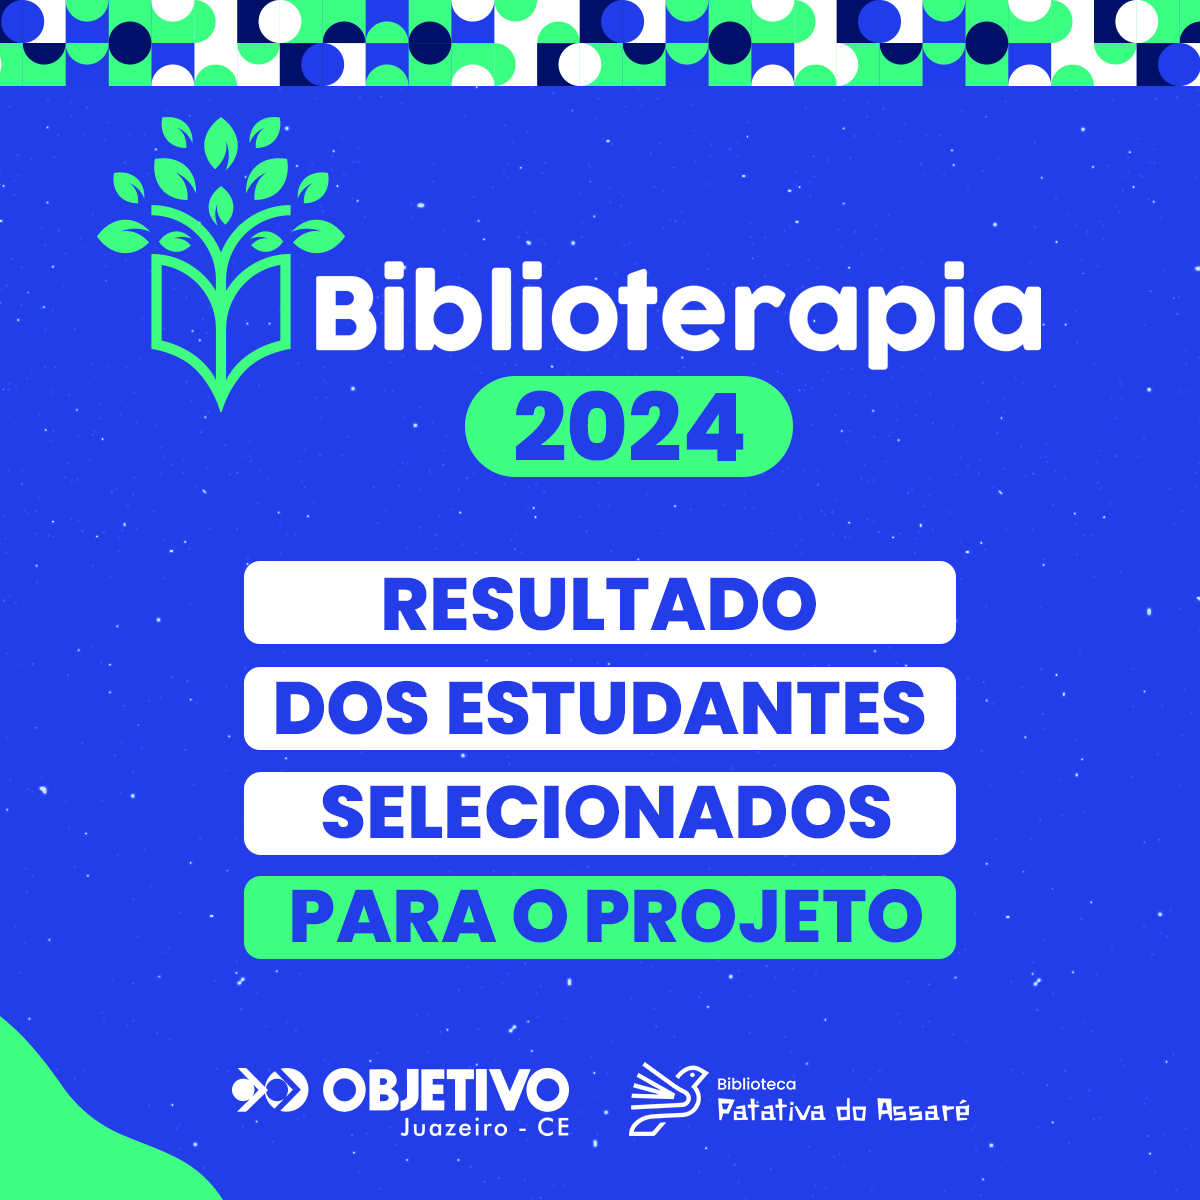 Resultado dos estudantes selecionados para o projeto Biblioterapia 2024